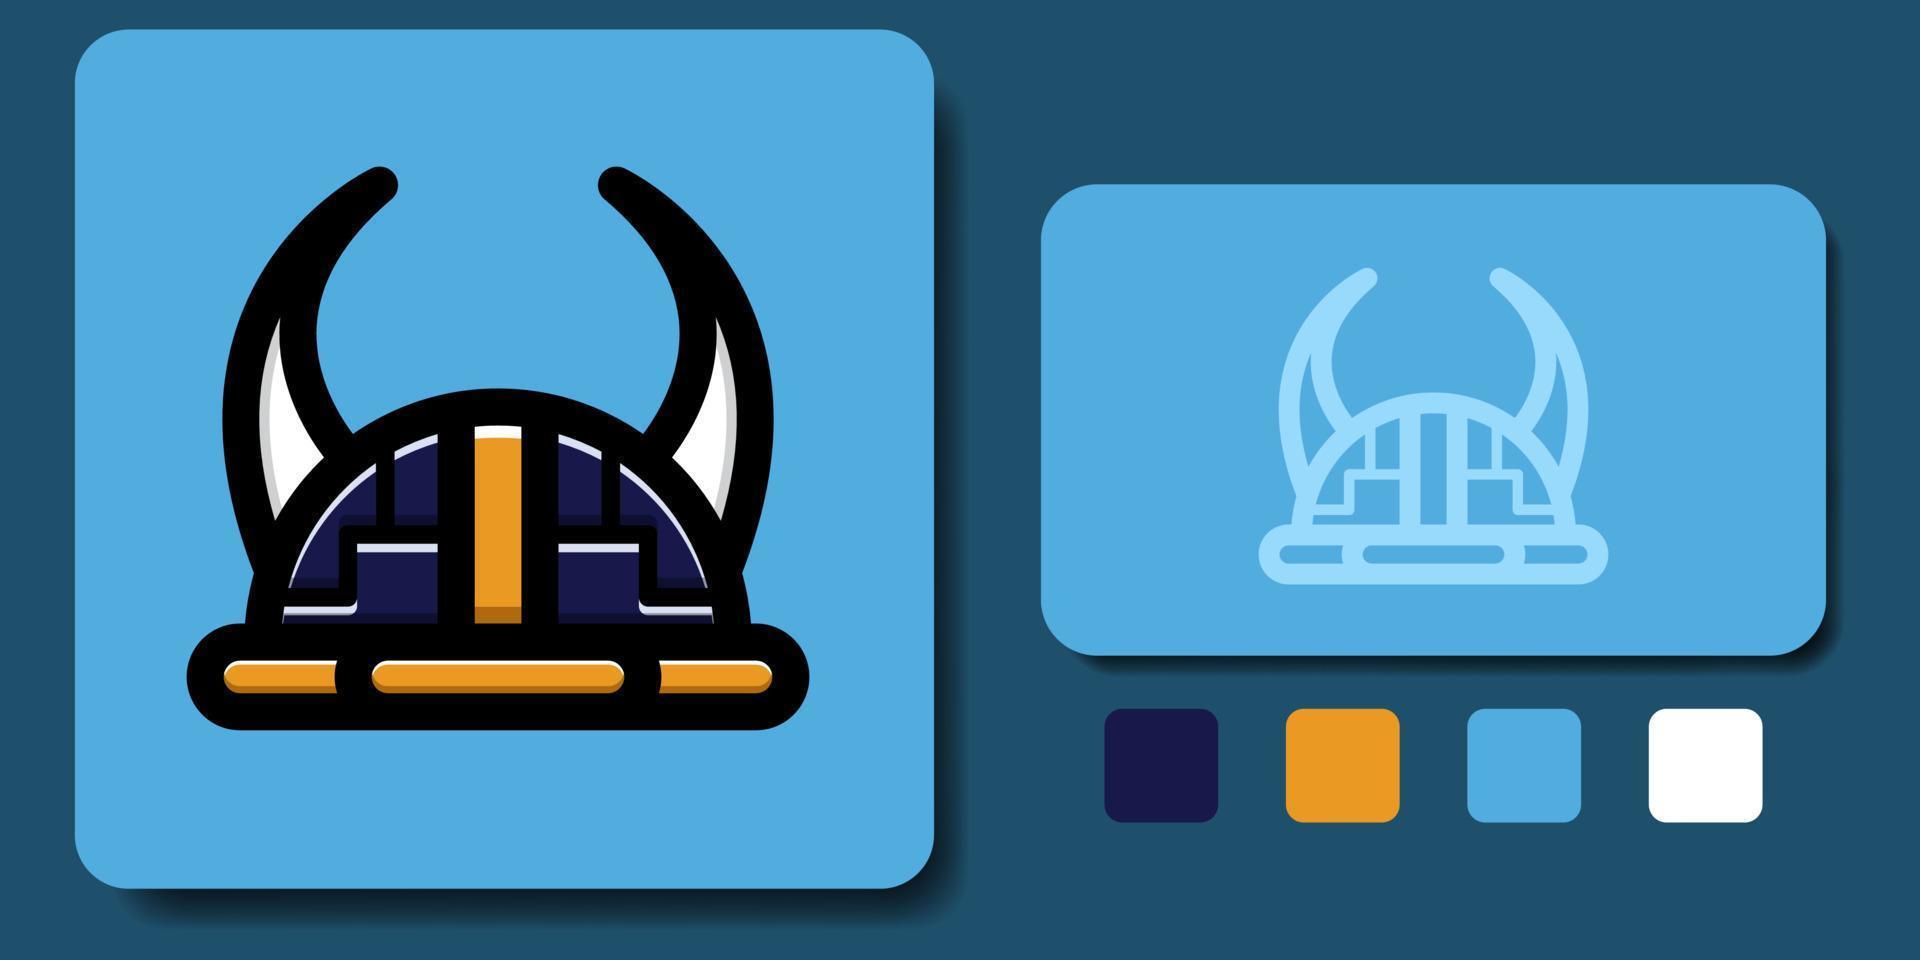 Futuristic viking helmet mascot design illustration. Sports team mascot logo type illustration vector